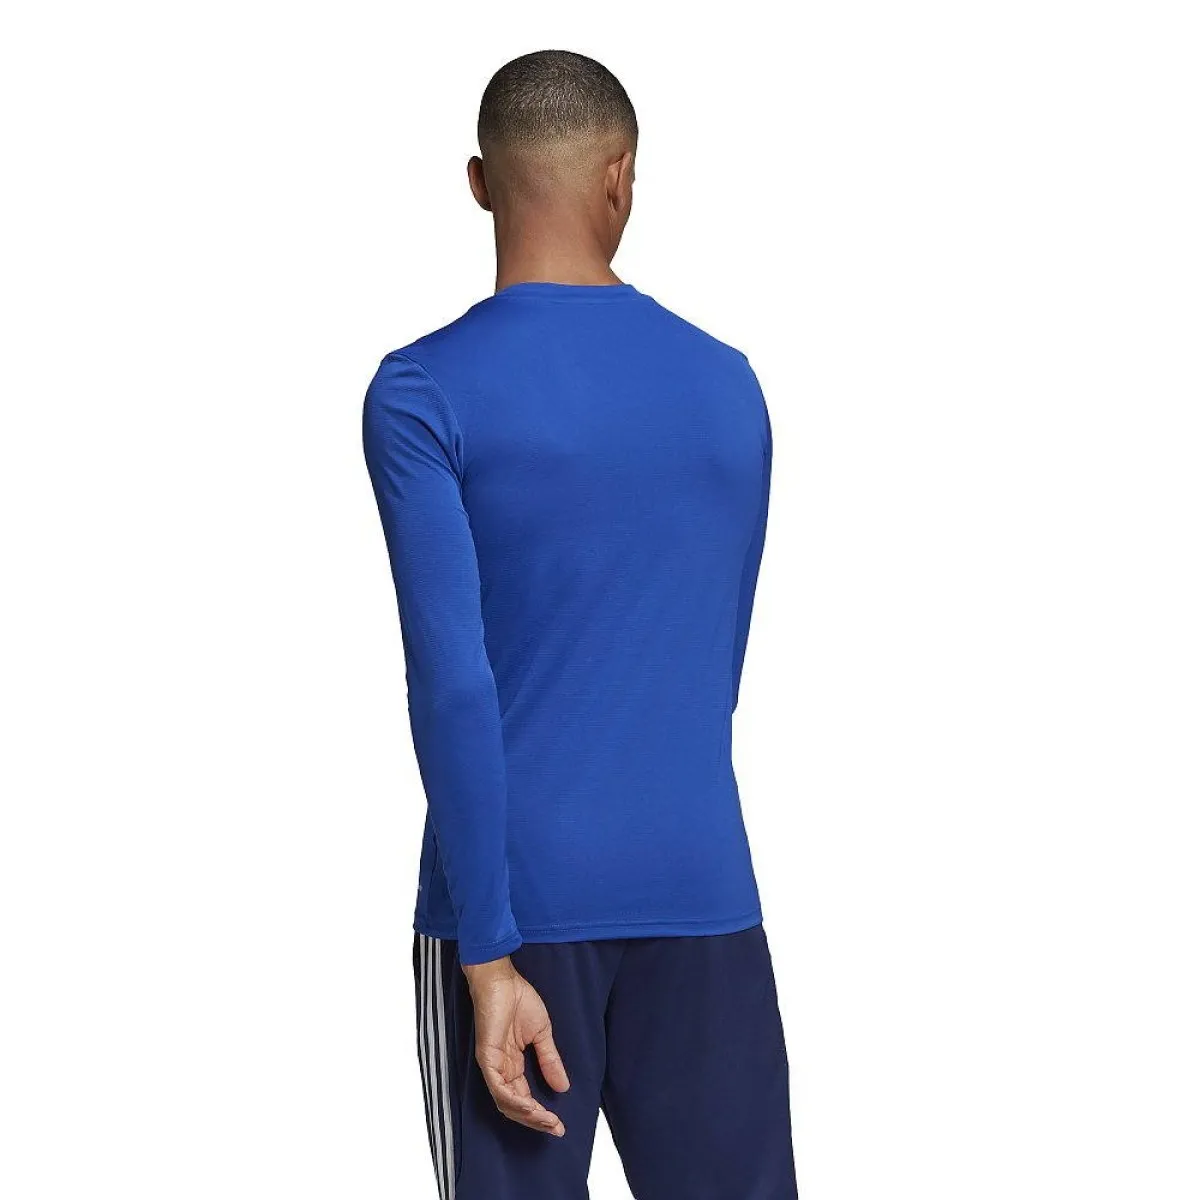 adidas Techfit T-Shirt long sleeve Team Base royal blue